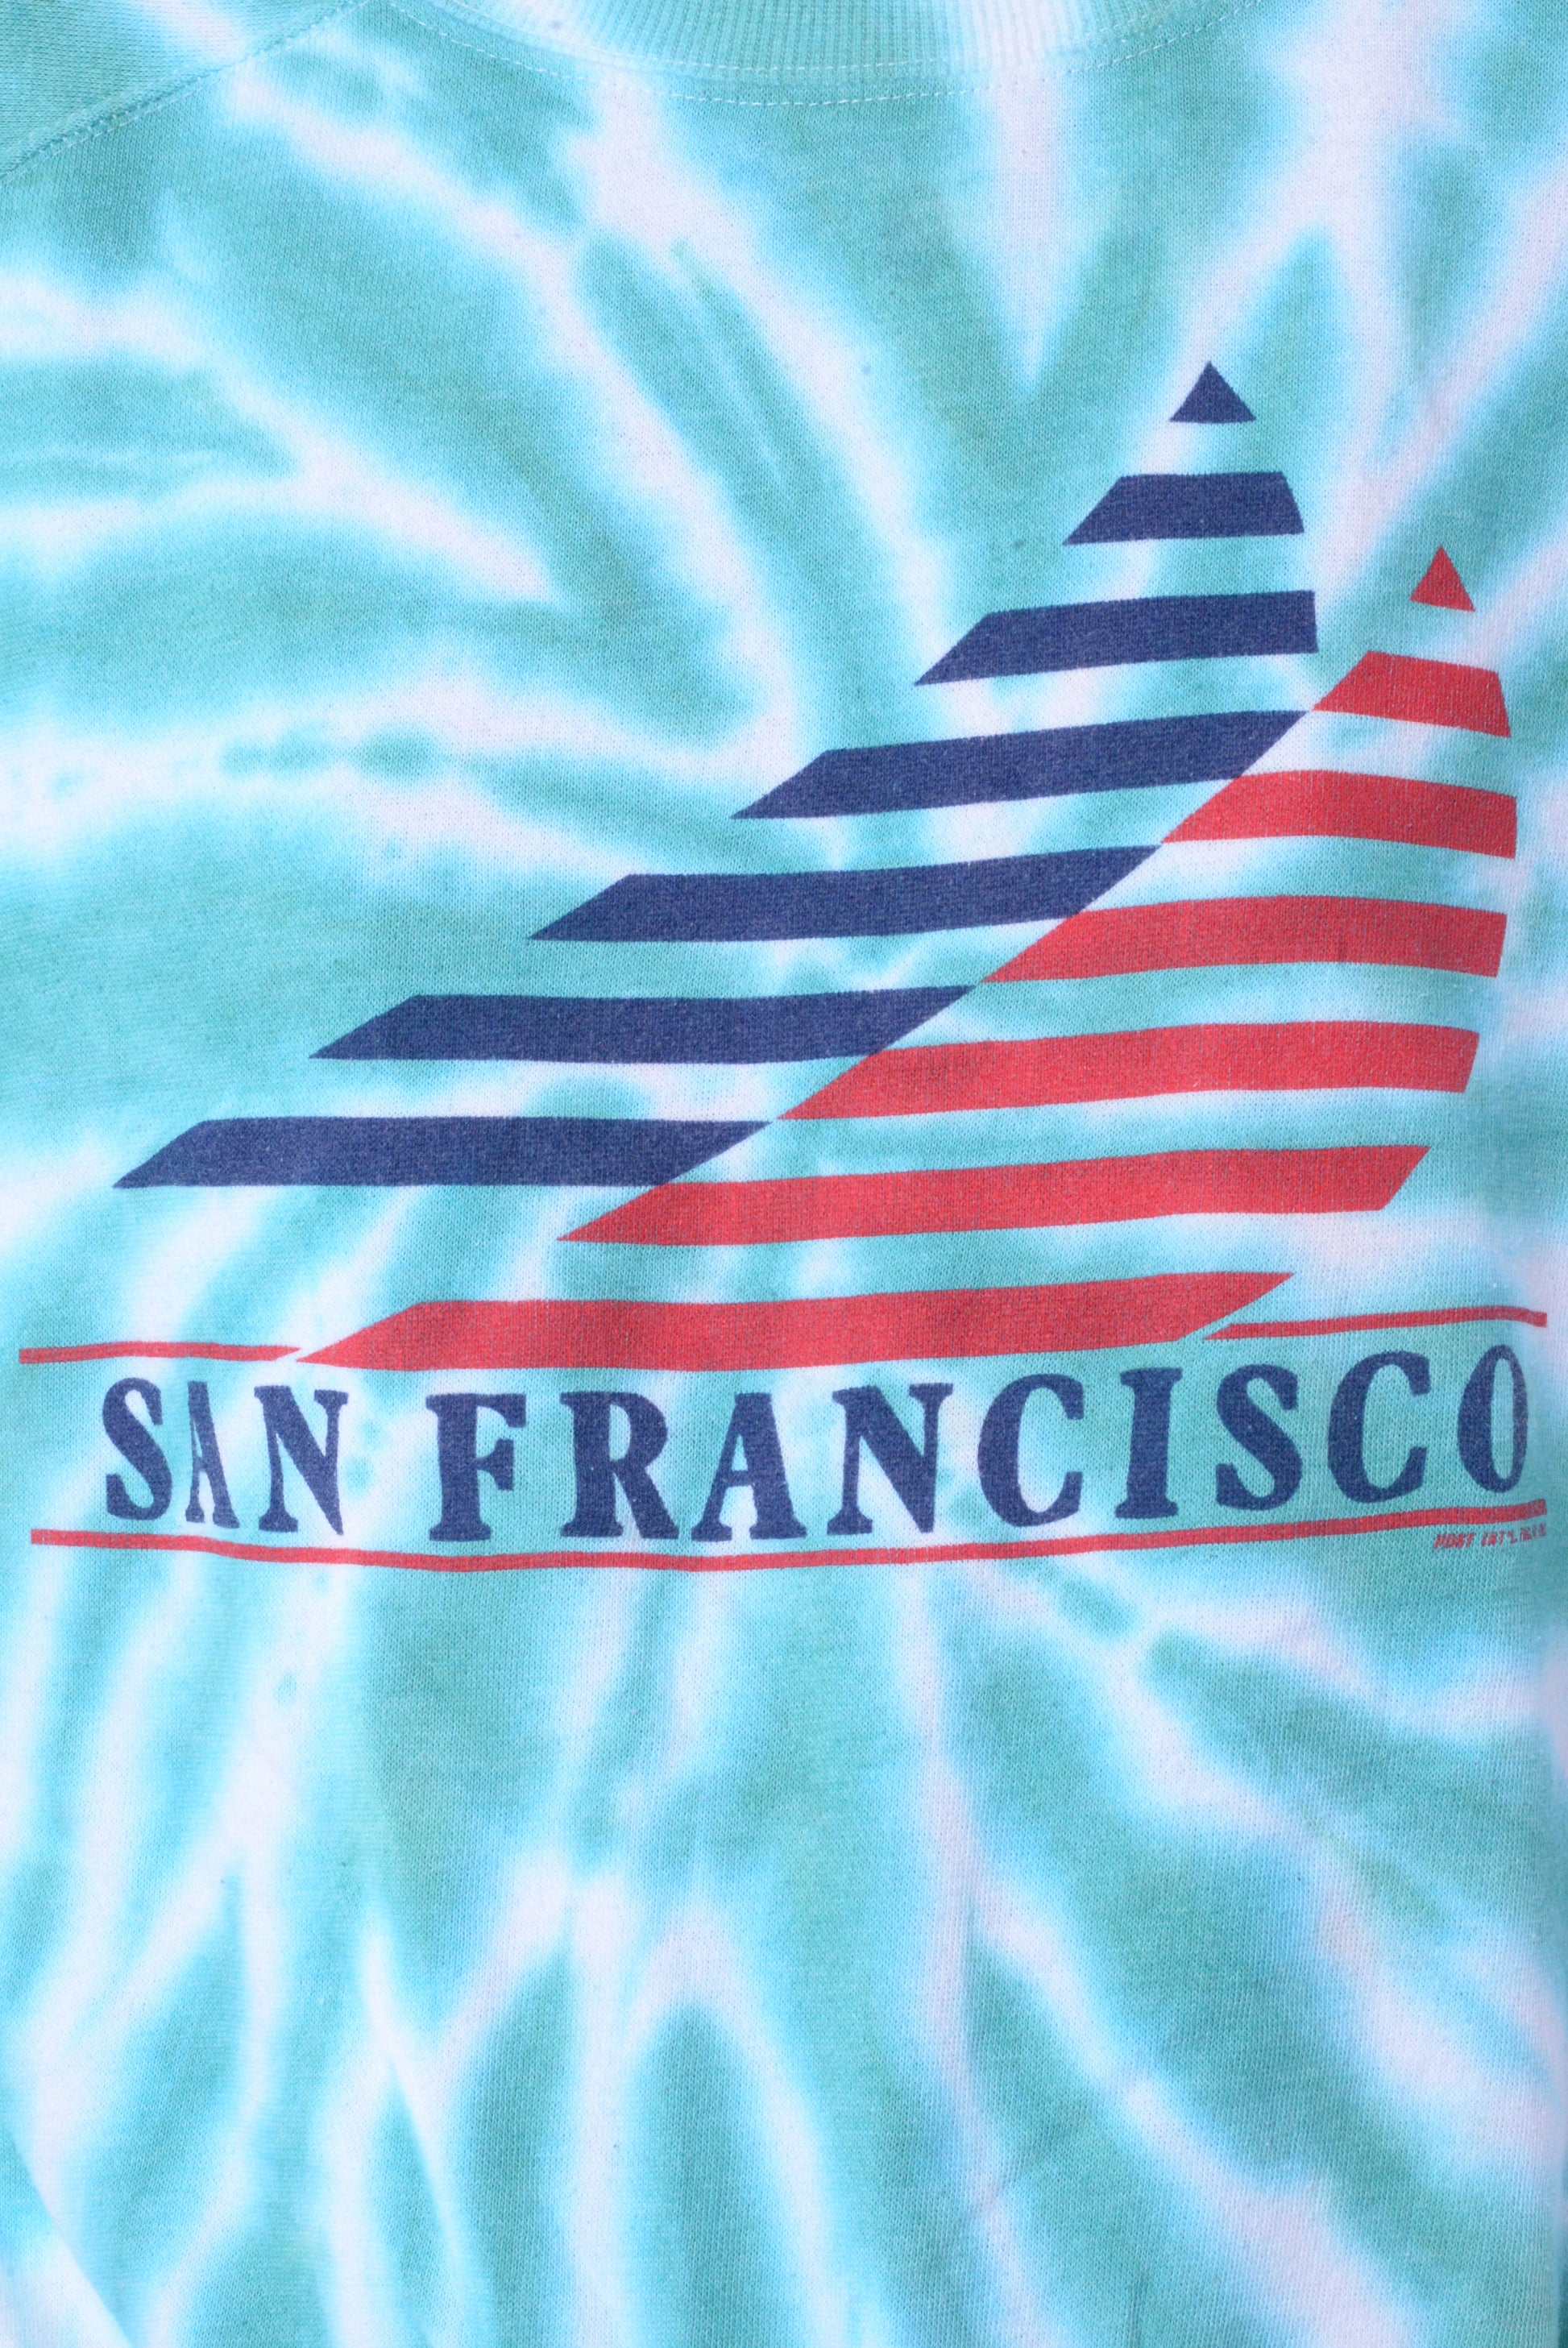 San Francisco Tie Dye Sweatshirt